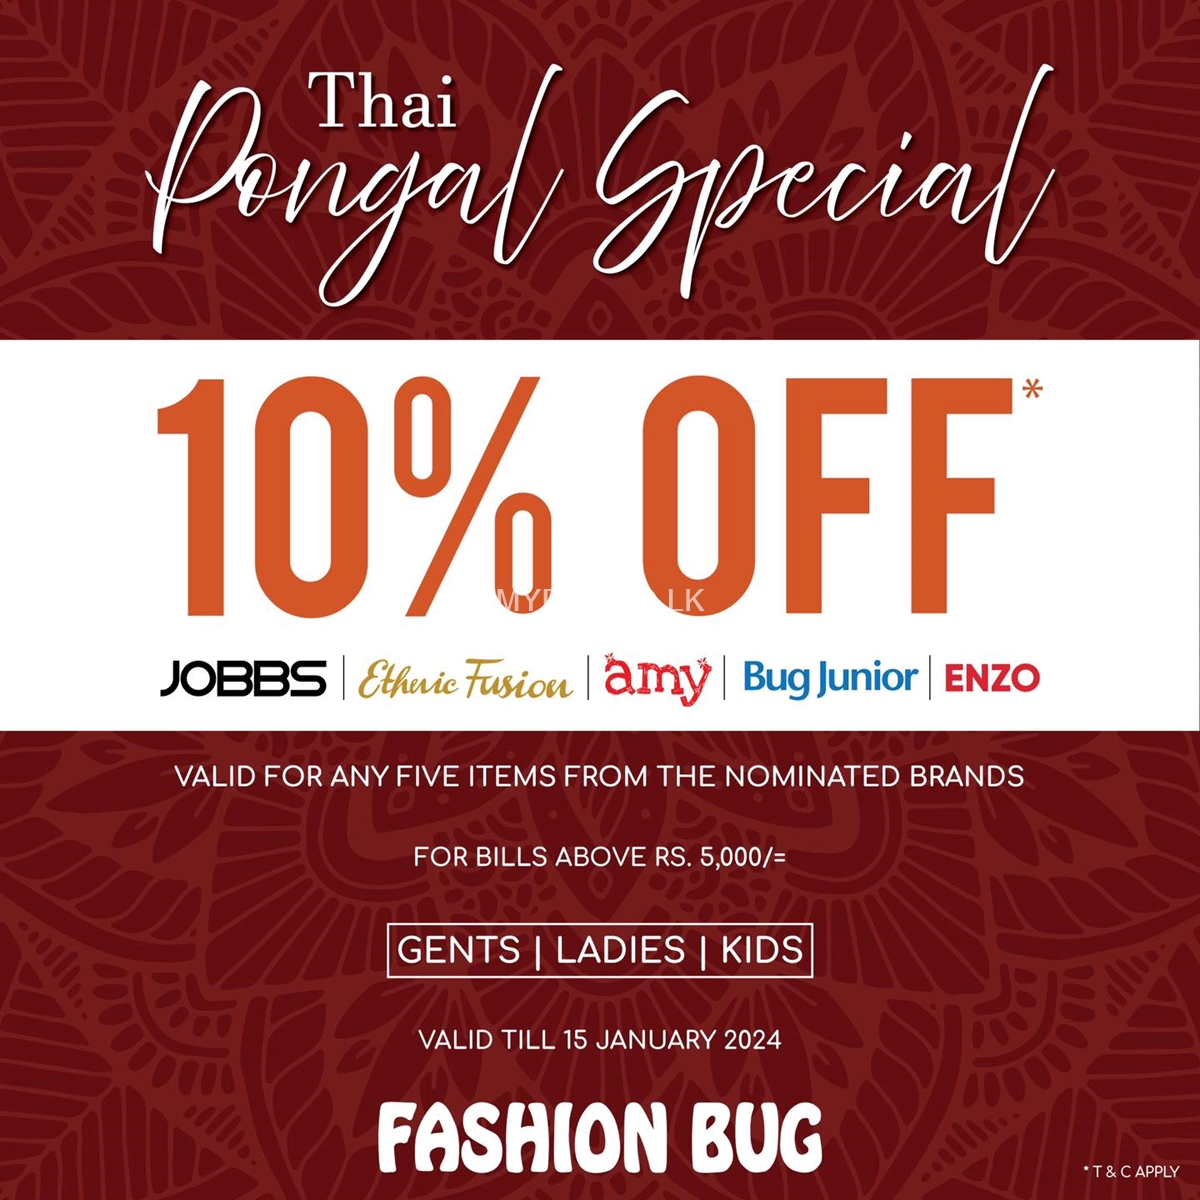 Thai pongal special at Fashion Bug